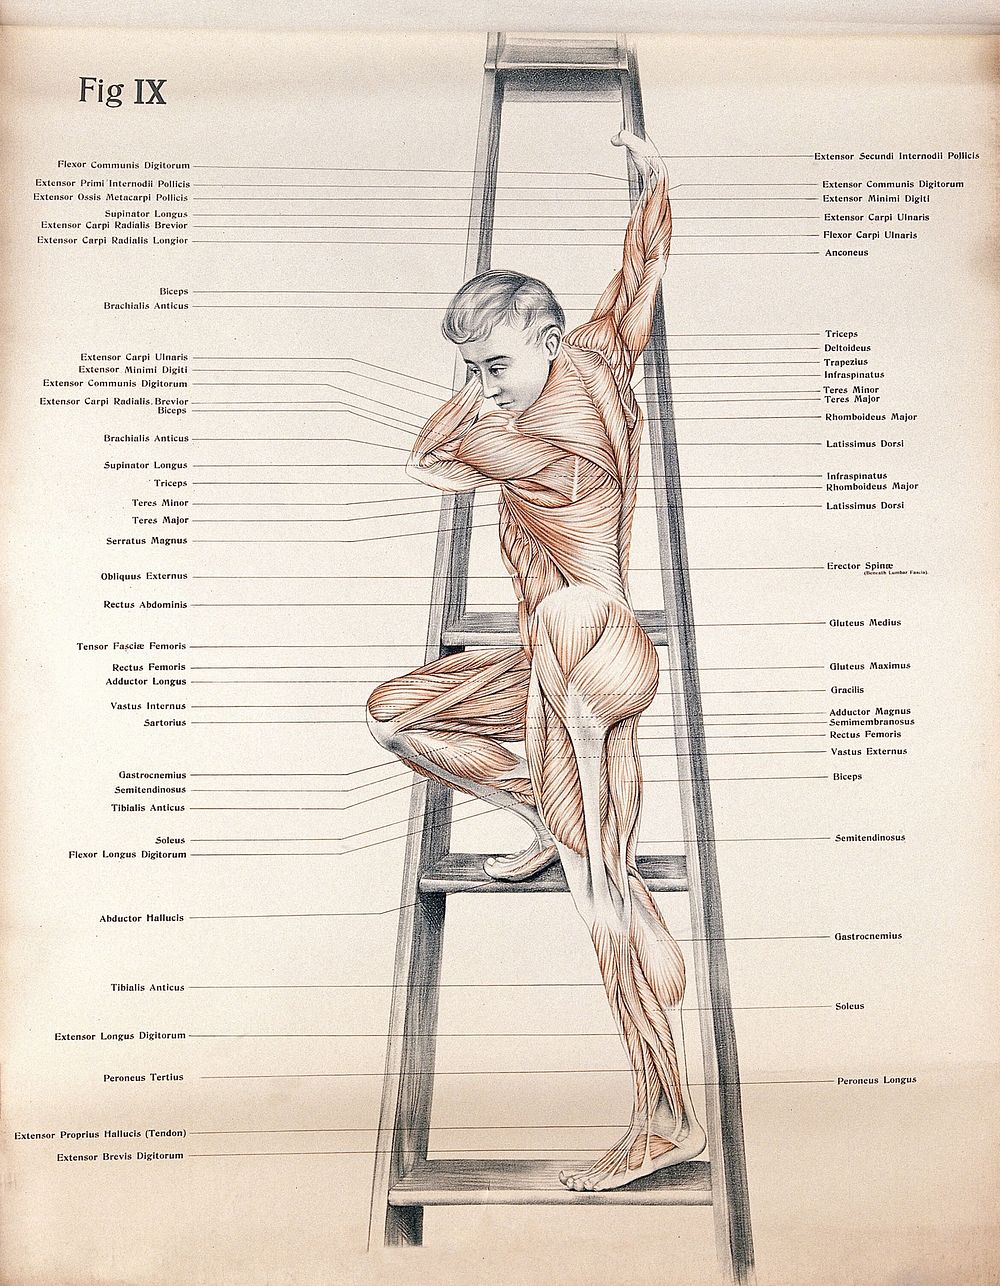 Artistic poses, plate IX: a man écorché climbing a ladder. Lithograph by Robert J. Colenso.